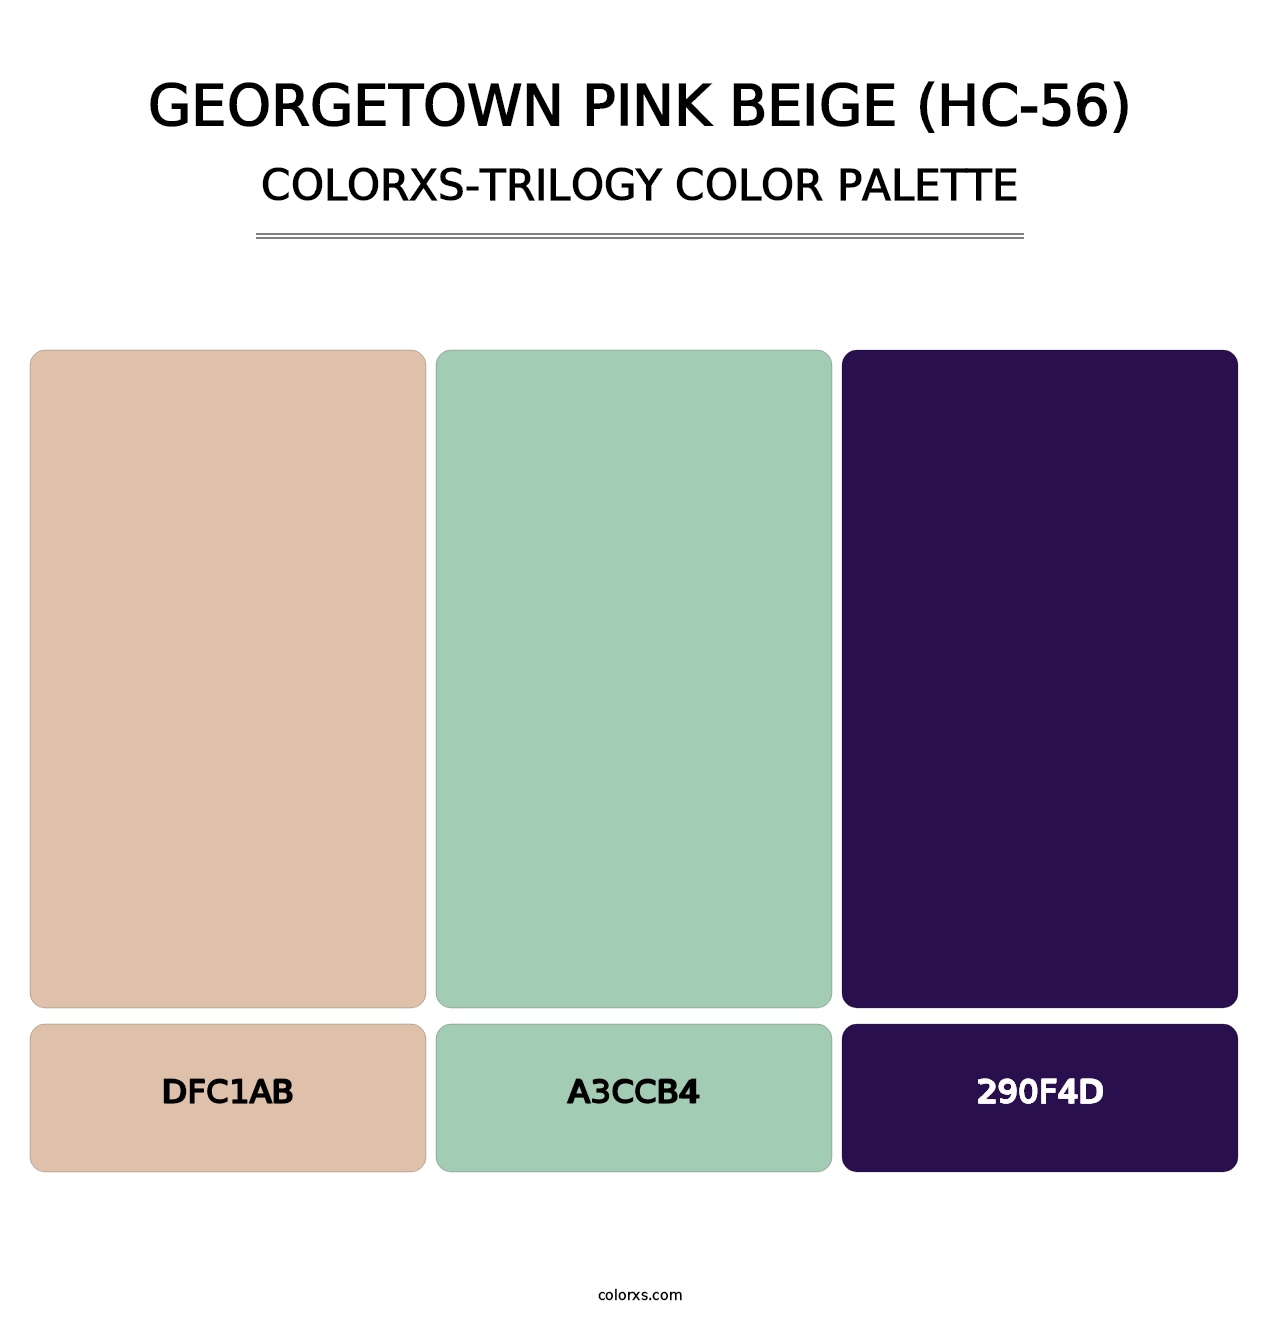 Georgetown Pink Beige (HC-56) - Colorxs Trilogy Palette